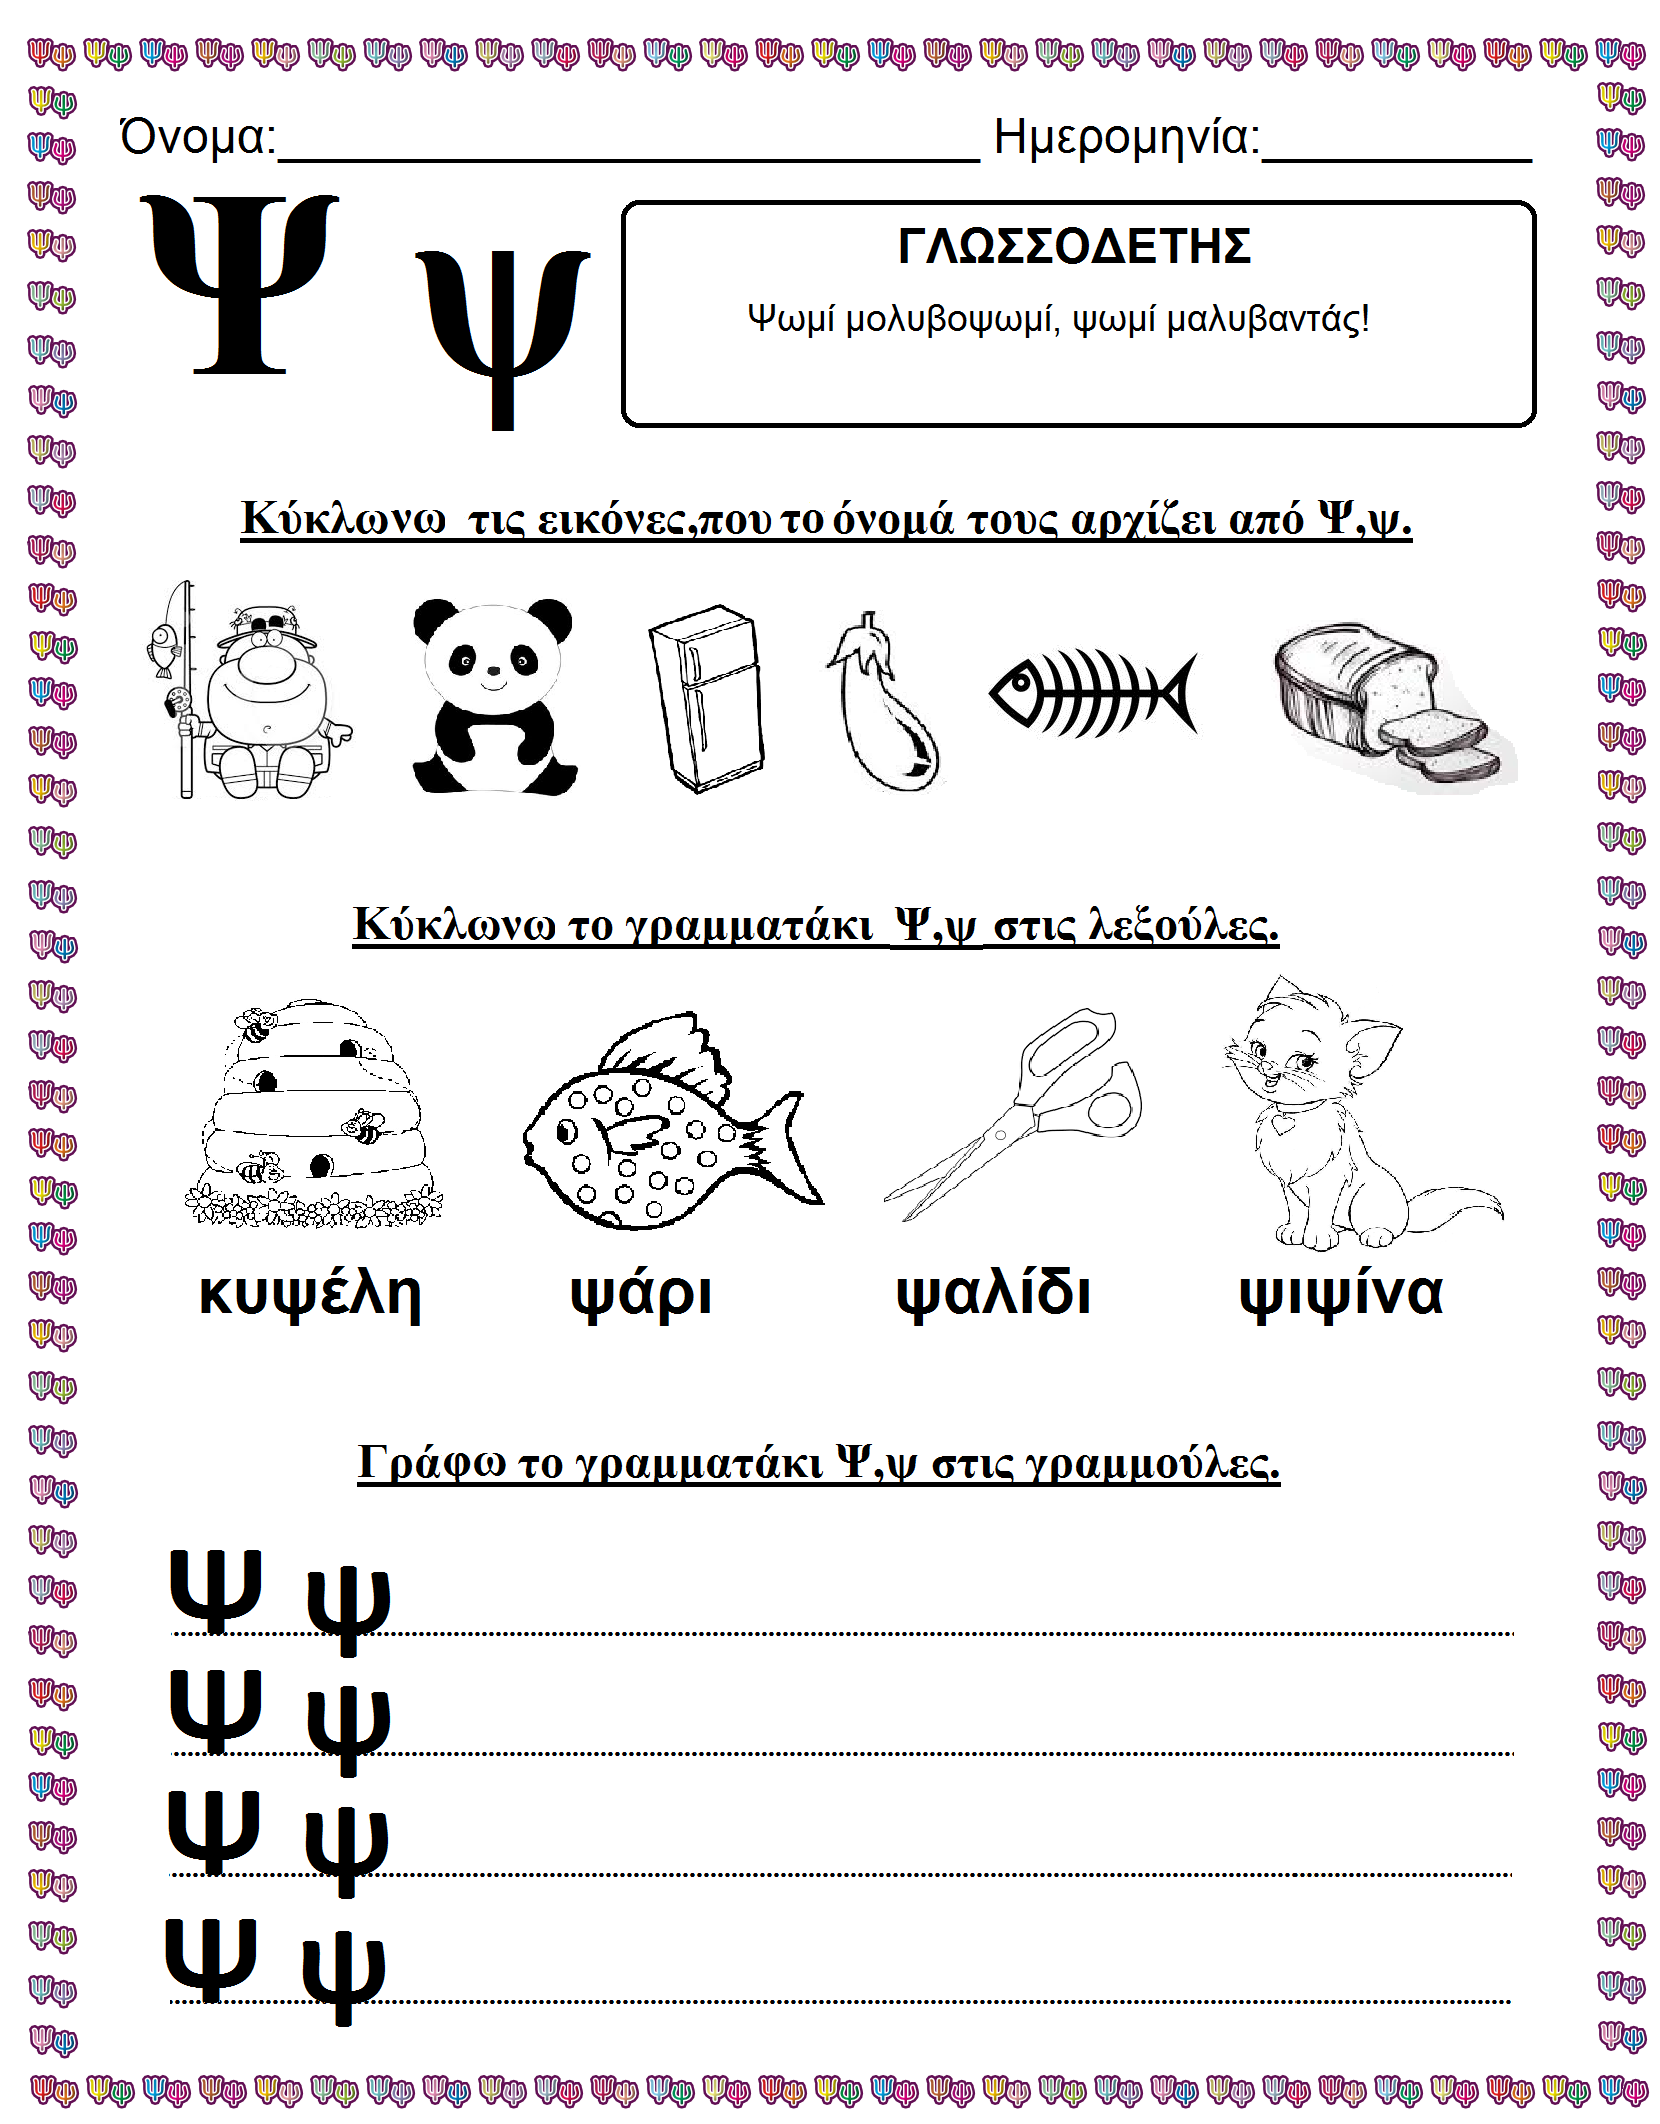 Pin By Maria Polson On Learn Greek Greek Language Greek Alphabet